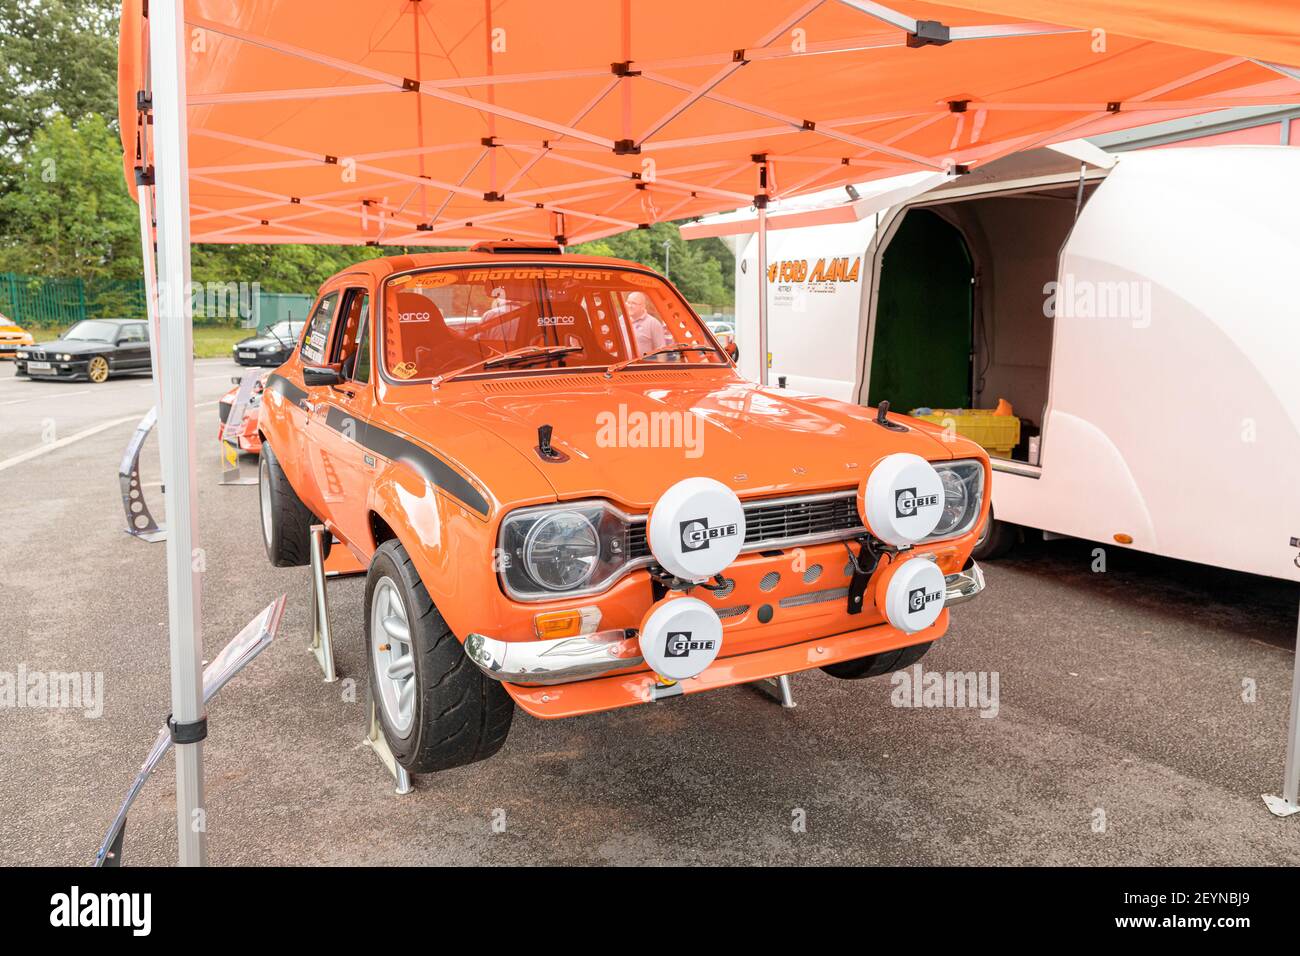 Darlington UK; 23rd August 2020: Auto Show orange Ford Escort mk1 Mexico Stock Photo